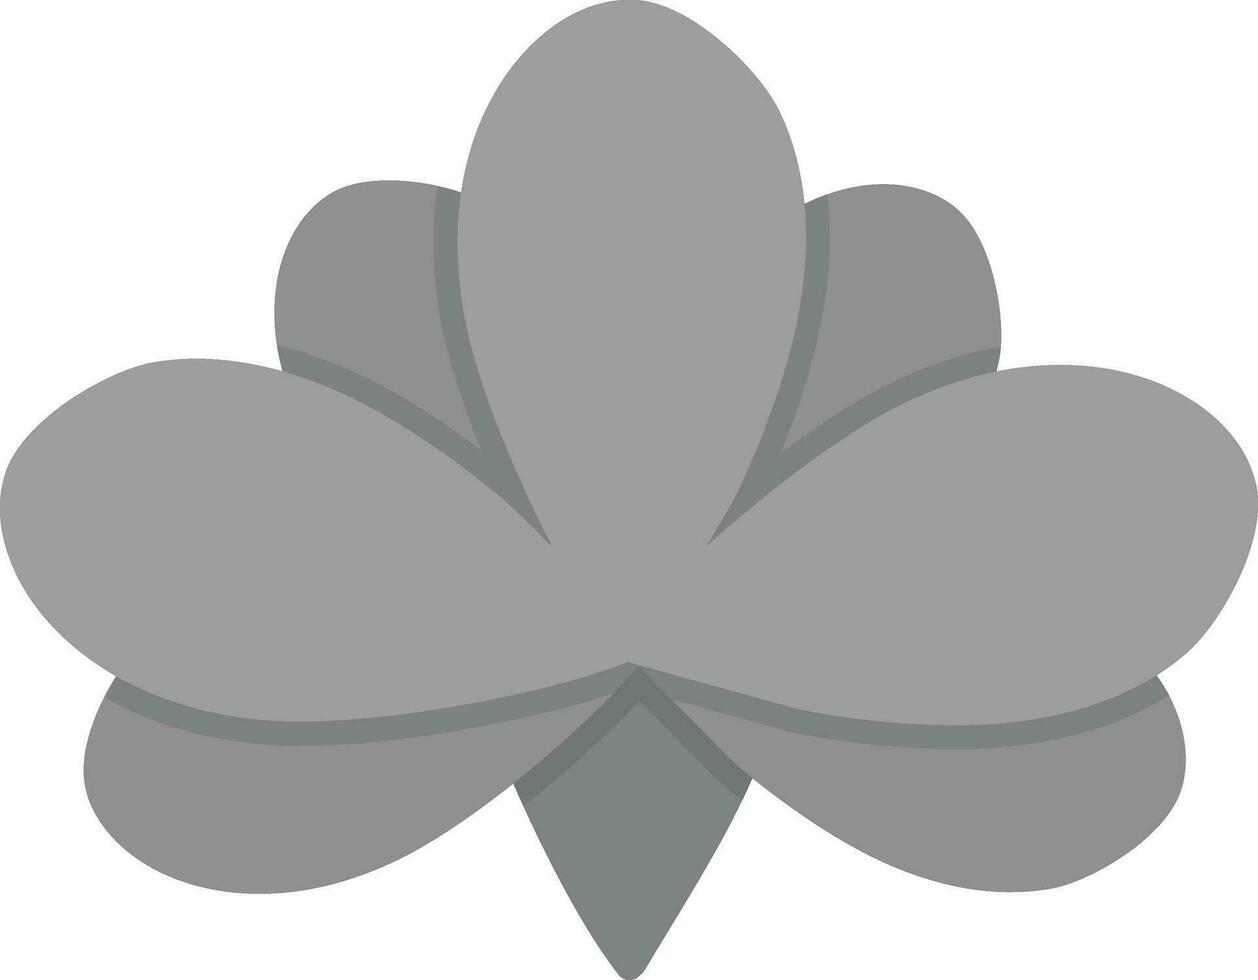 lotus vektor ikon